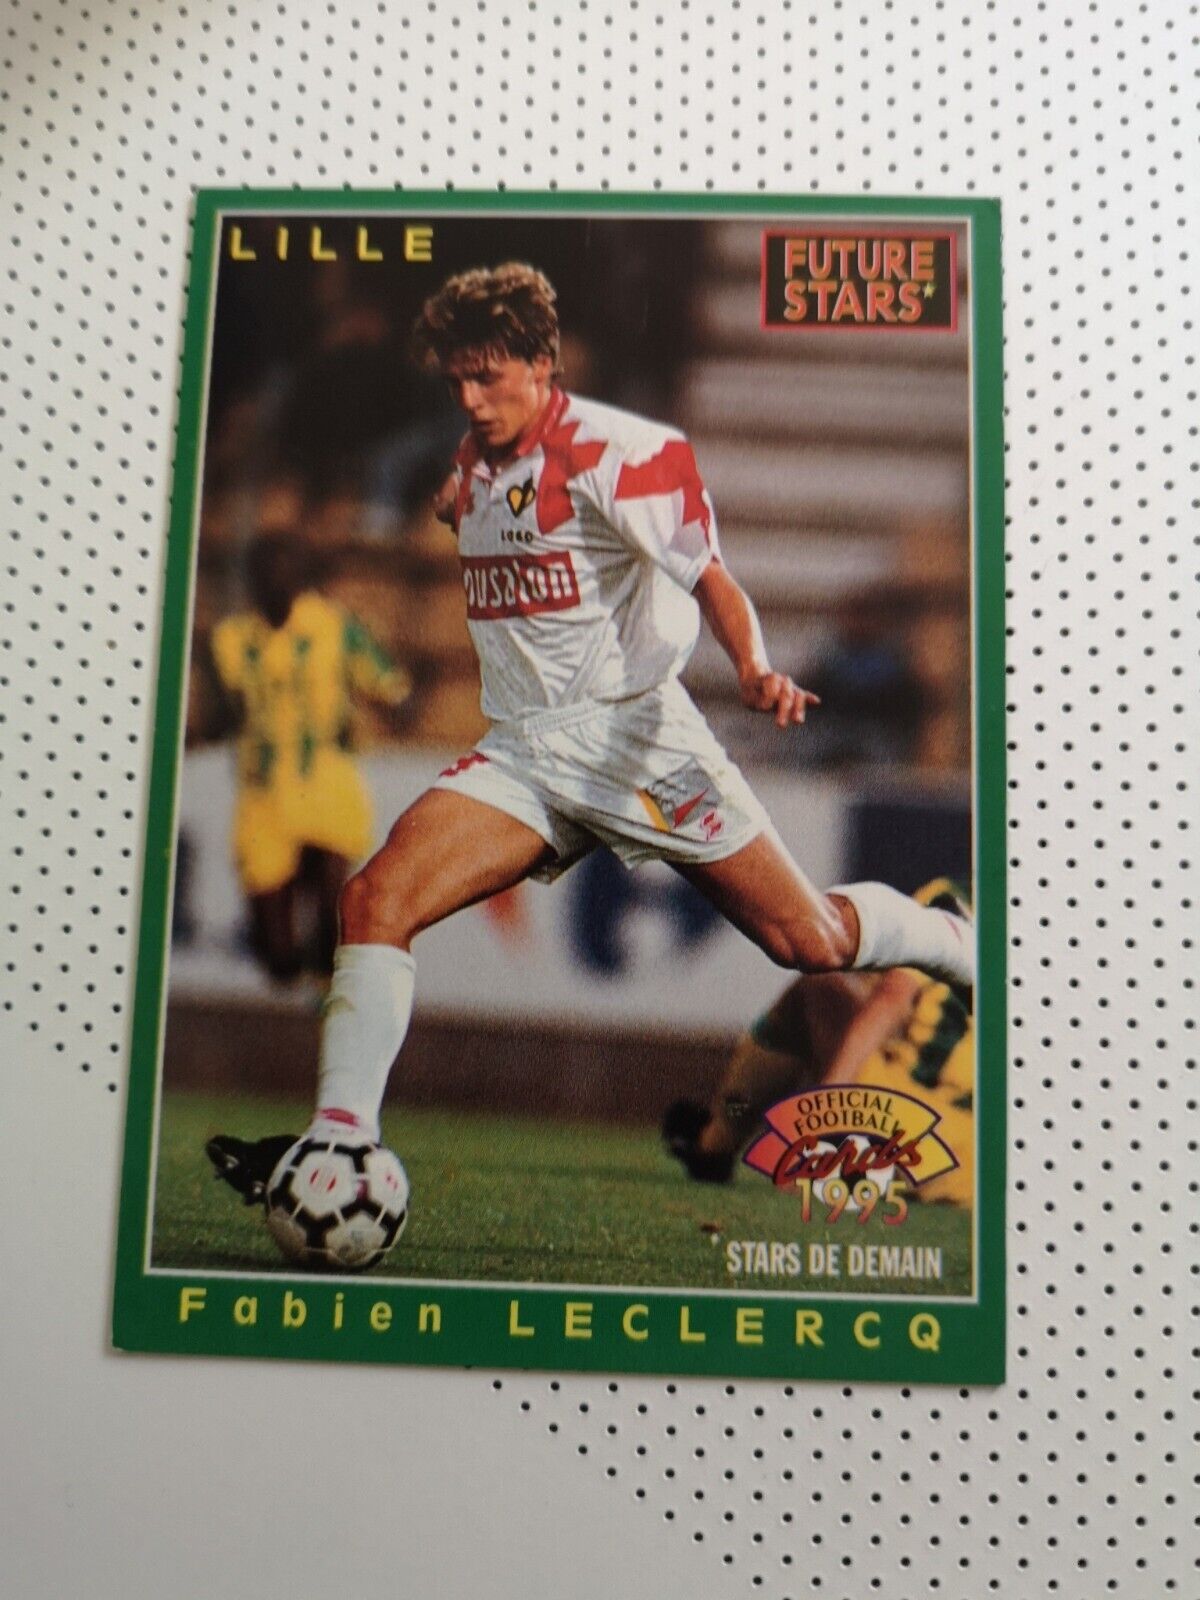 1995 Fabien Leclerc Future Stars Panini Official Football Cards #224